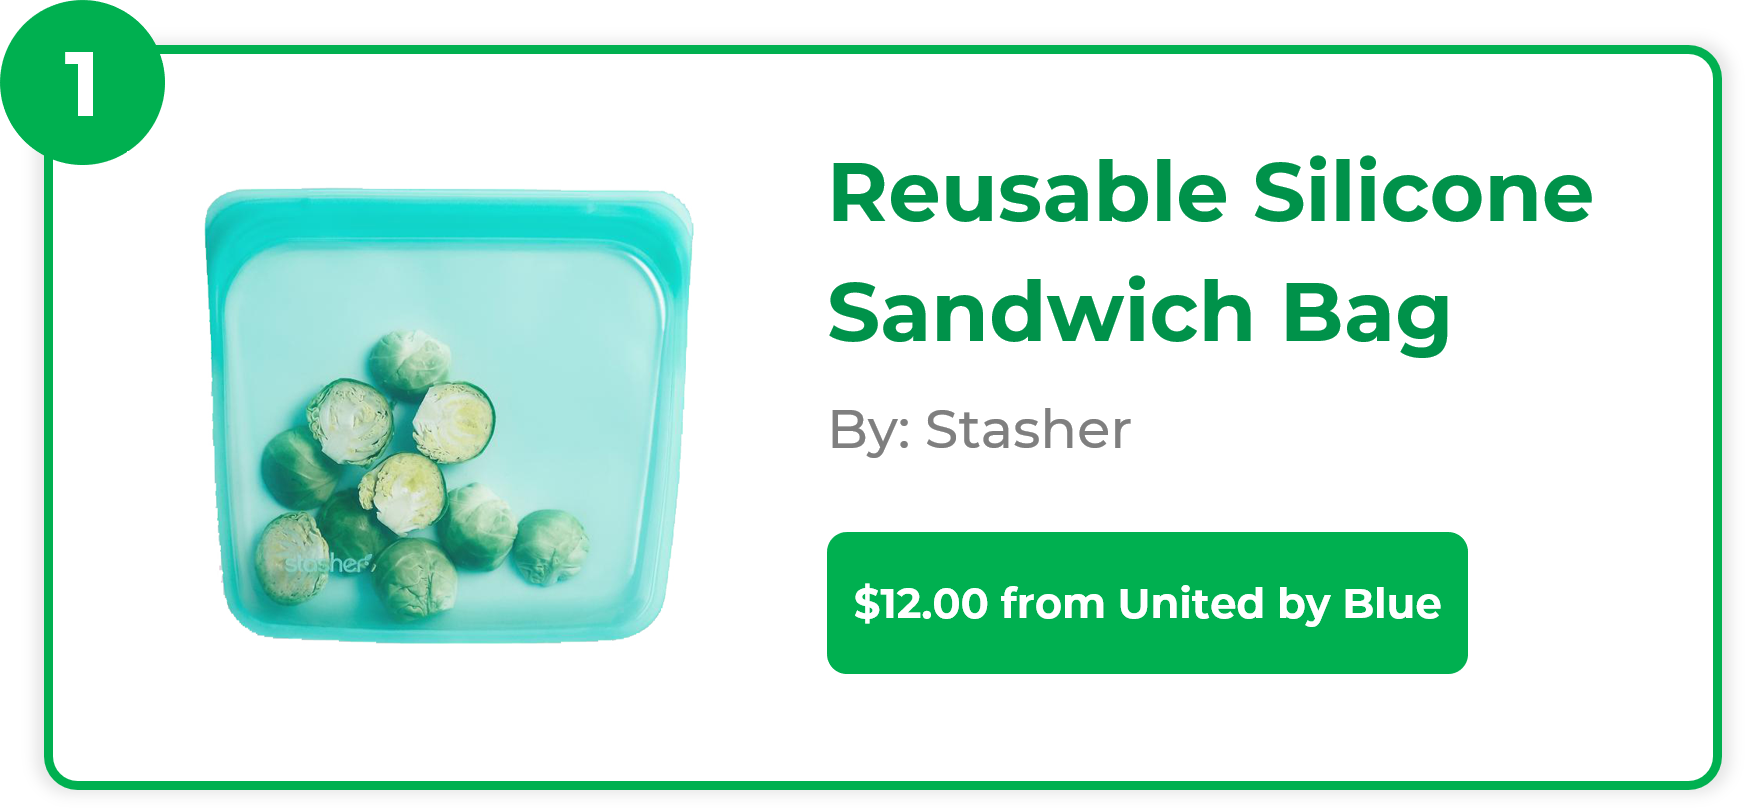 Reusable Silicone Sandwich Bag - Stasher